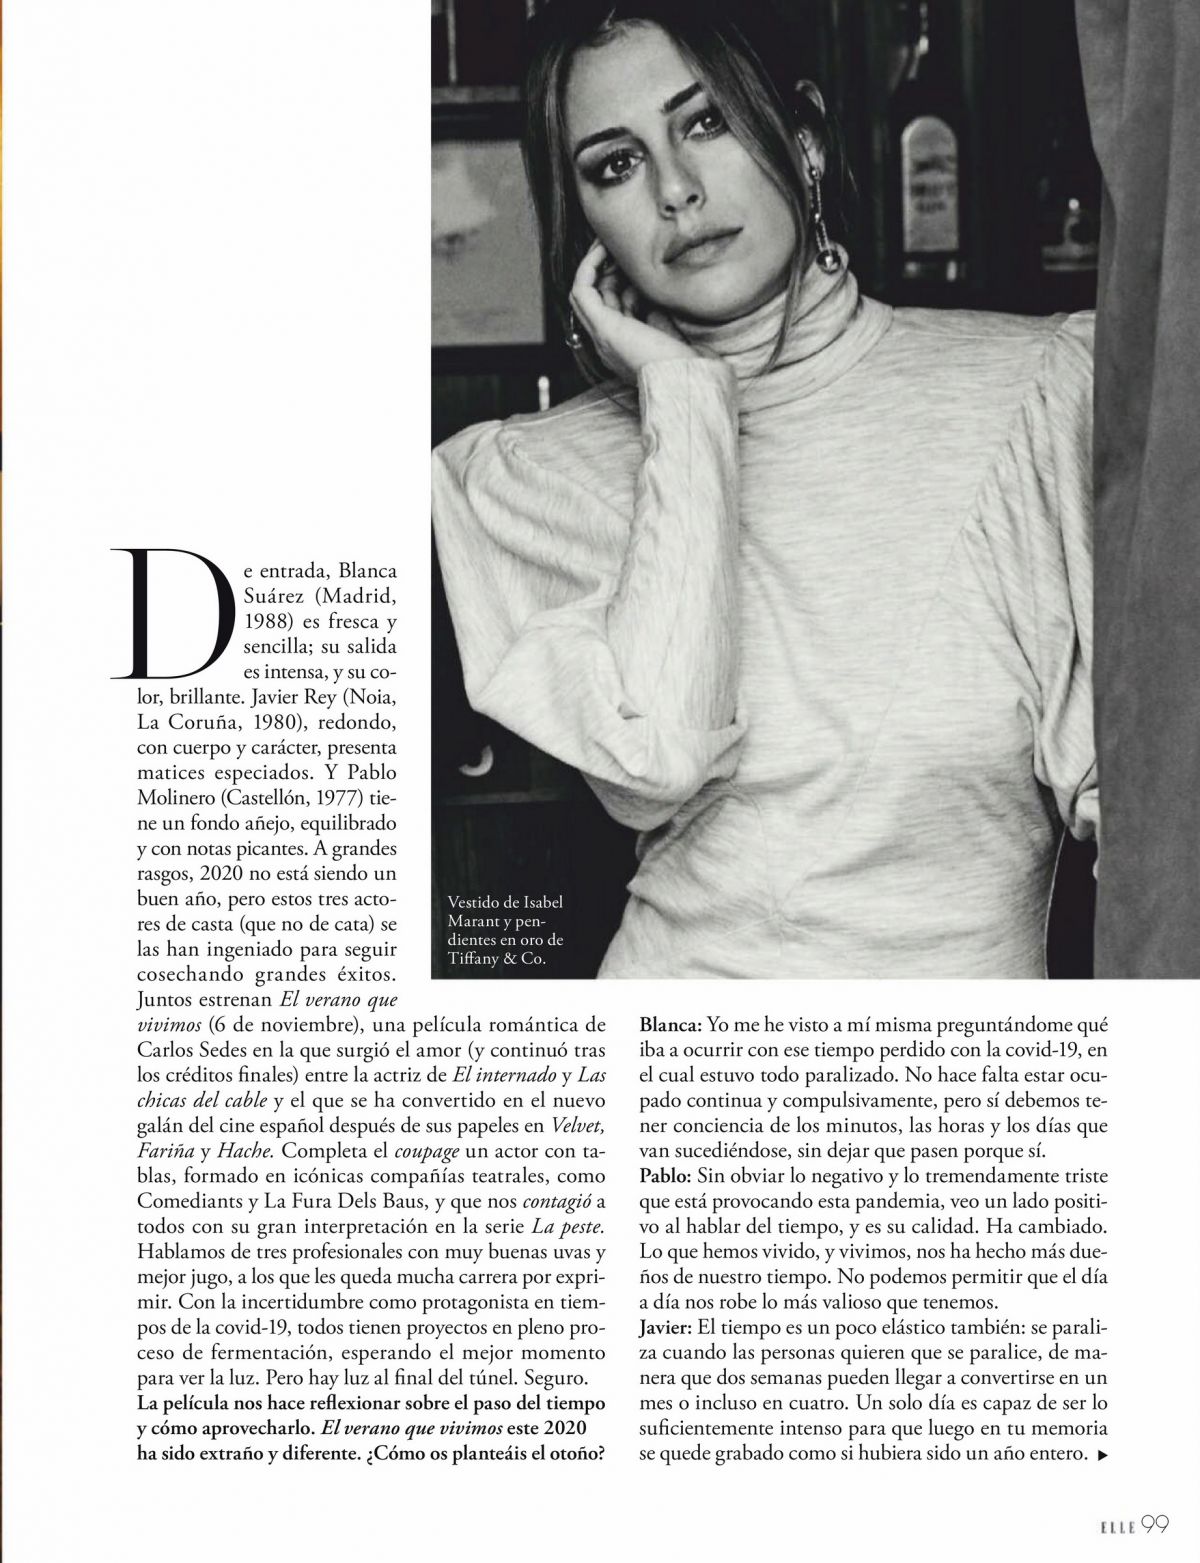 Blanca Suarez in Elle Magazine, Spain November 2020 Issue 2